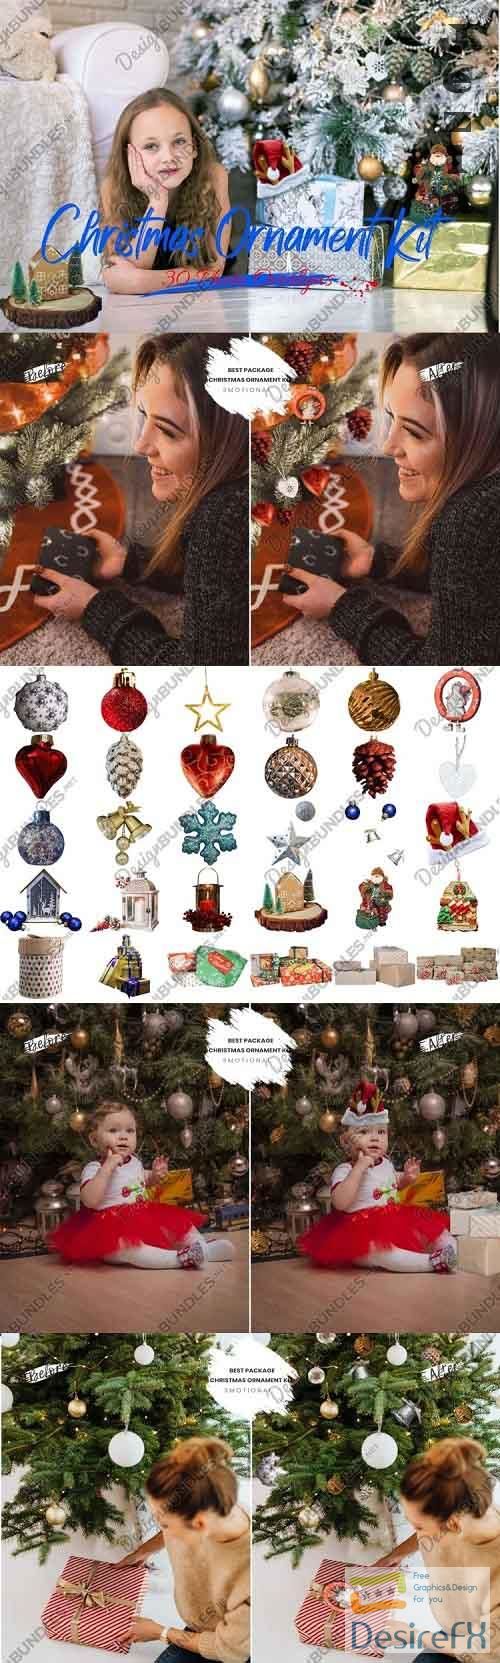 Christmas Ornament kit Photoshop Overlays - 997605